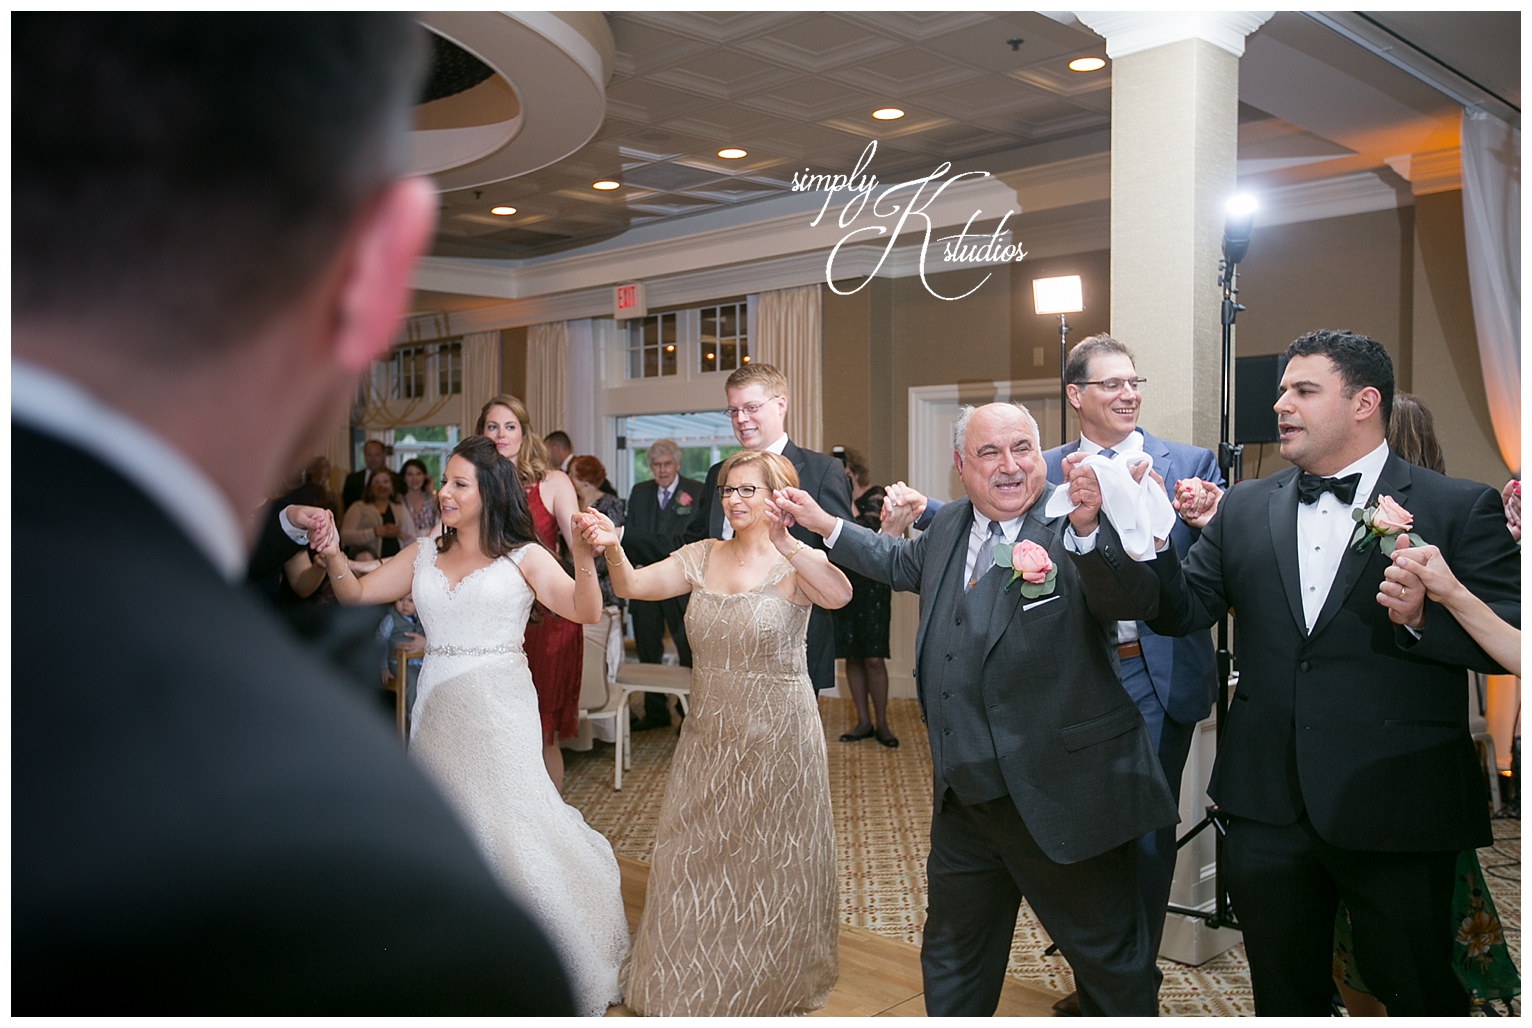 Greek Dancing at a Wedding.jpg